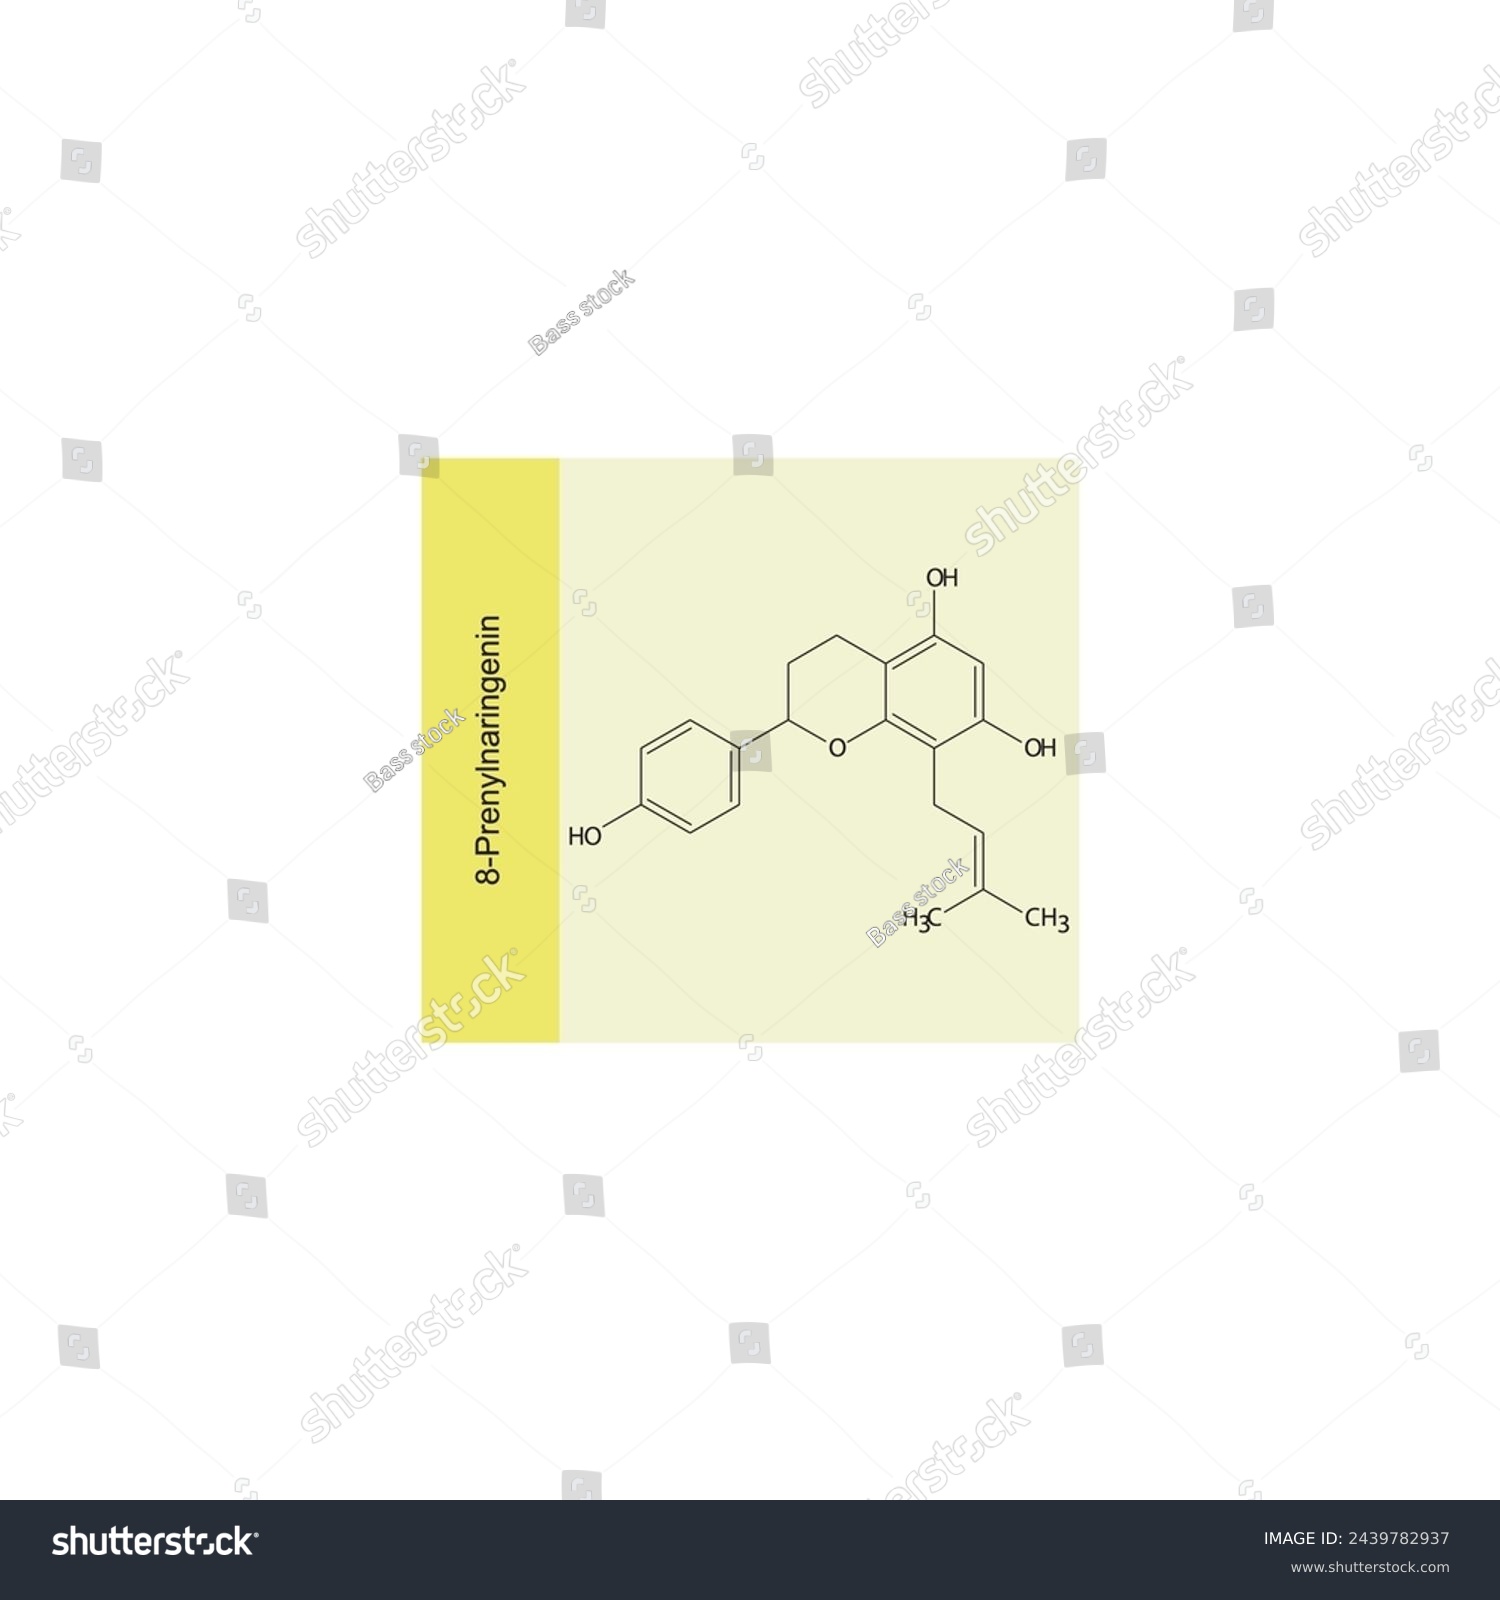 SVG of 8-Prenylnaringenin skeletal structure diagram.Isoflavanone compound molecule scientific illustration on yellow background. svg